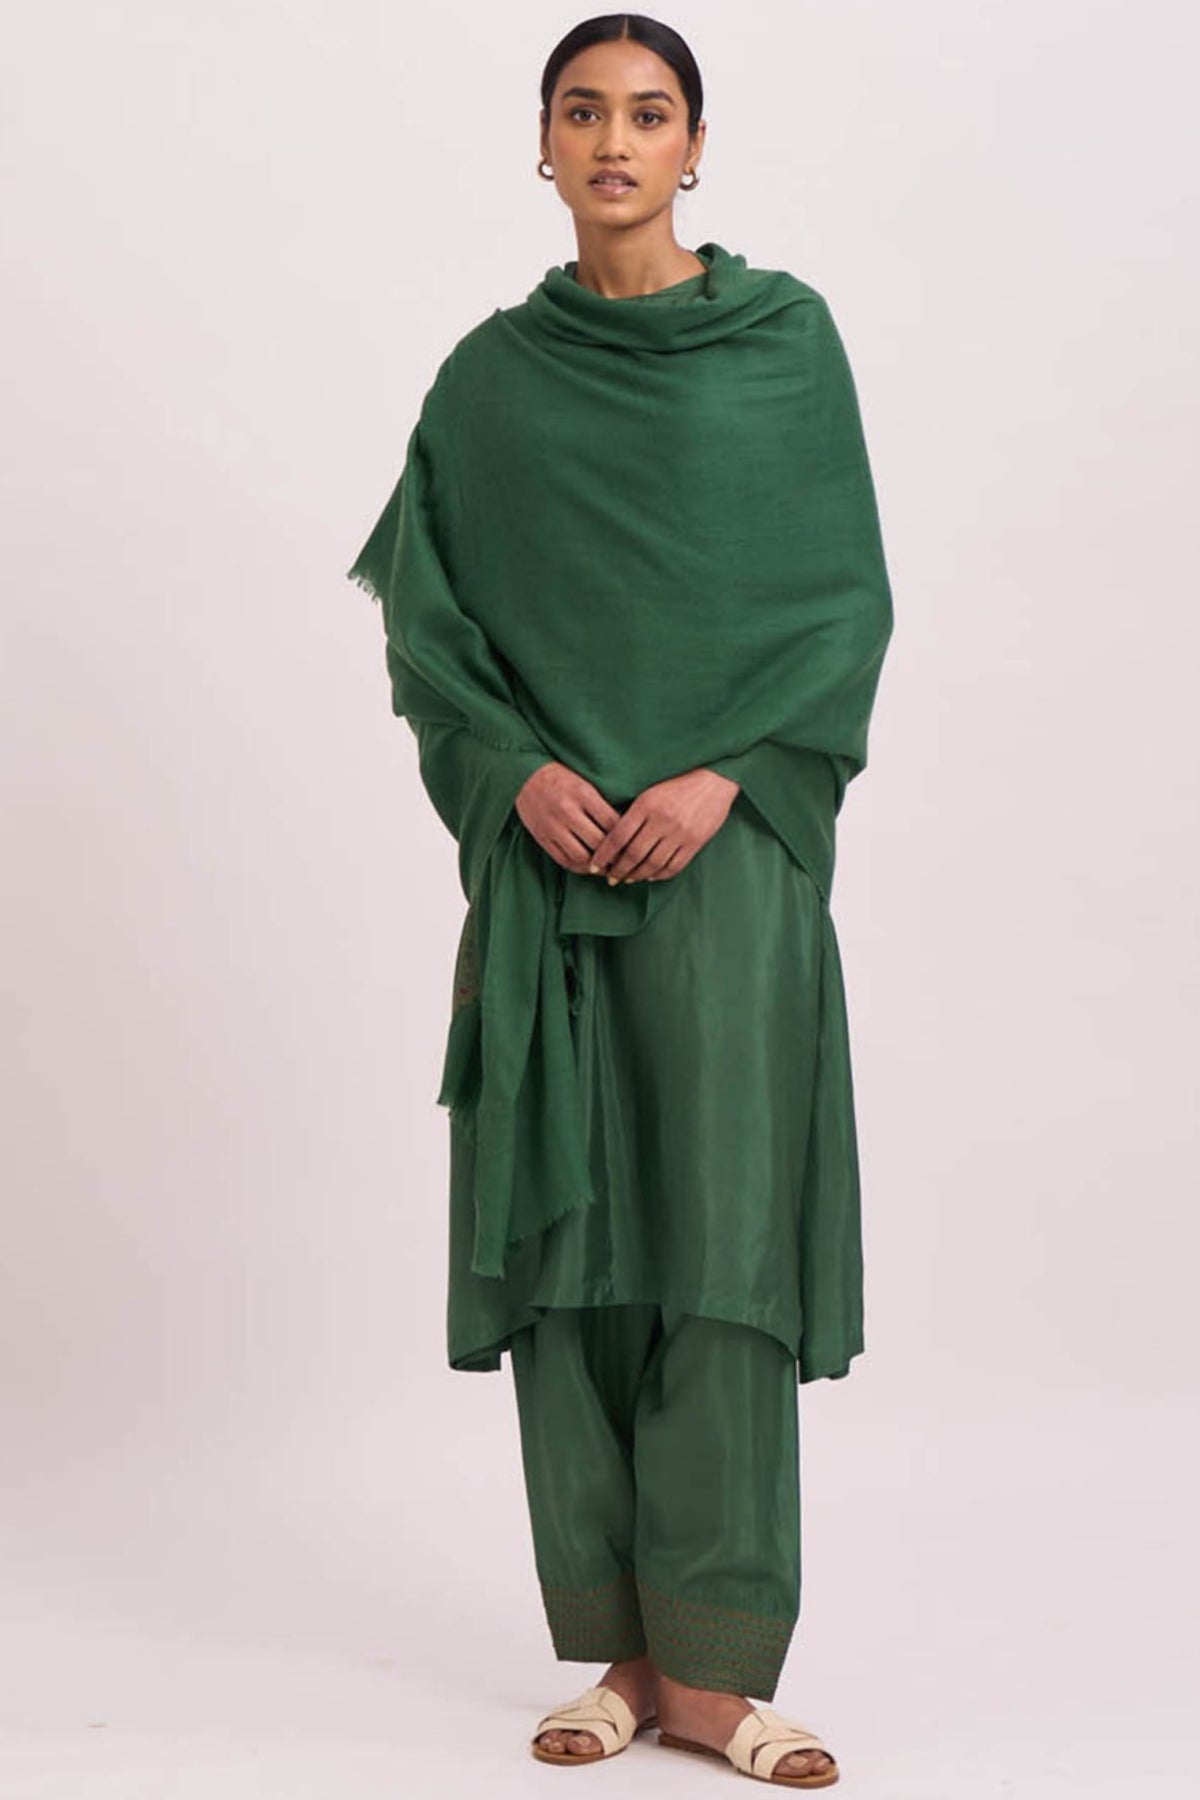 Olive green shawl